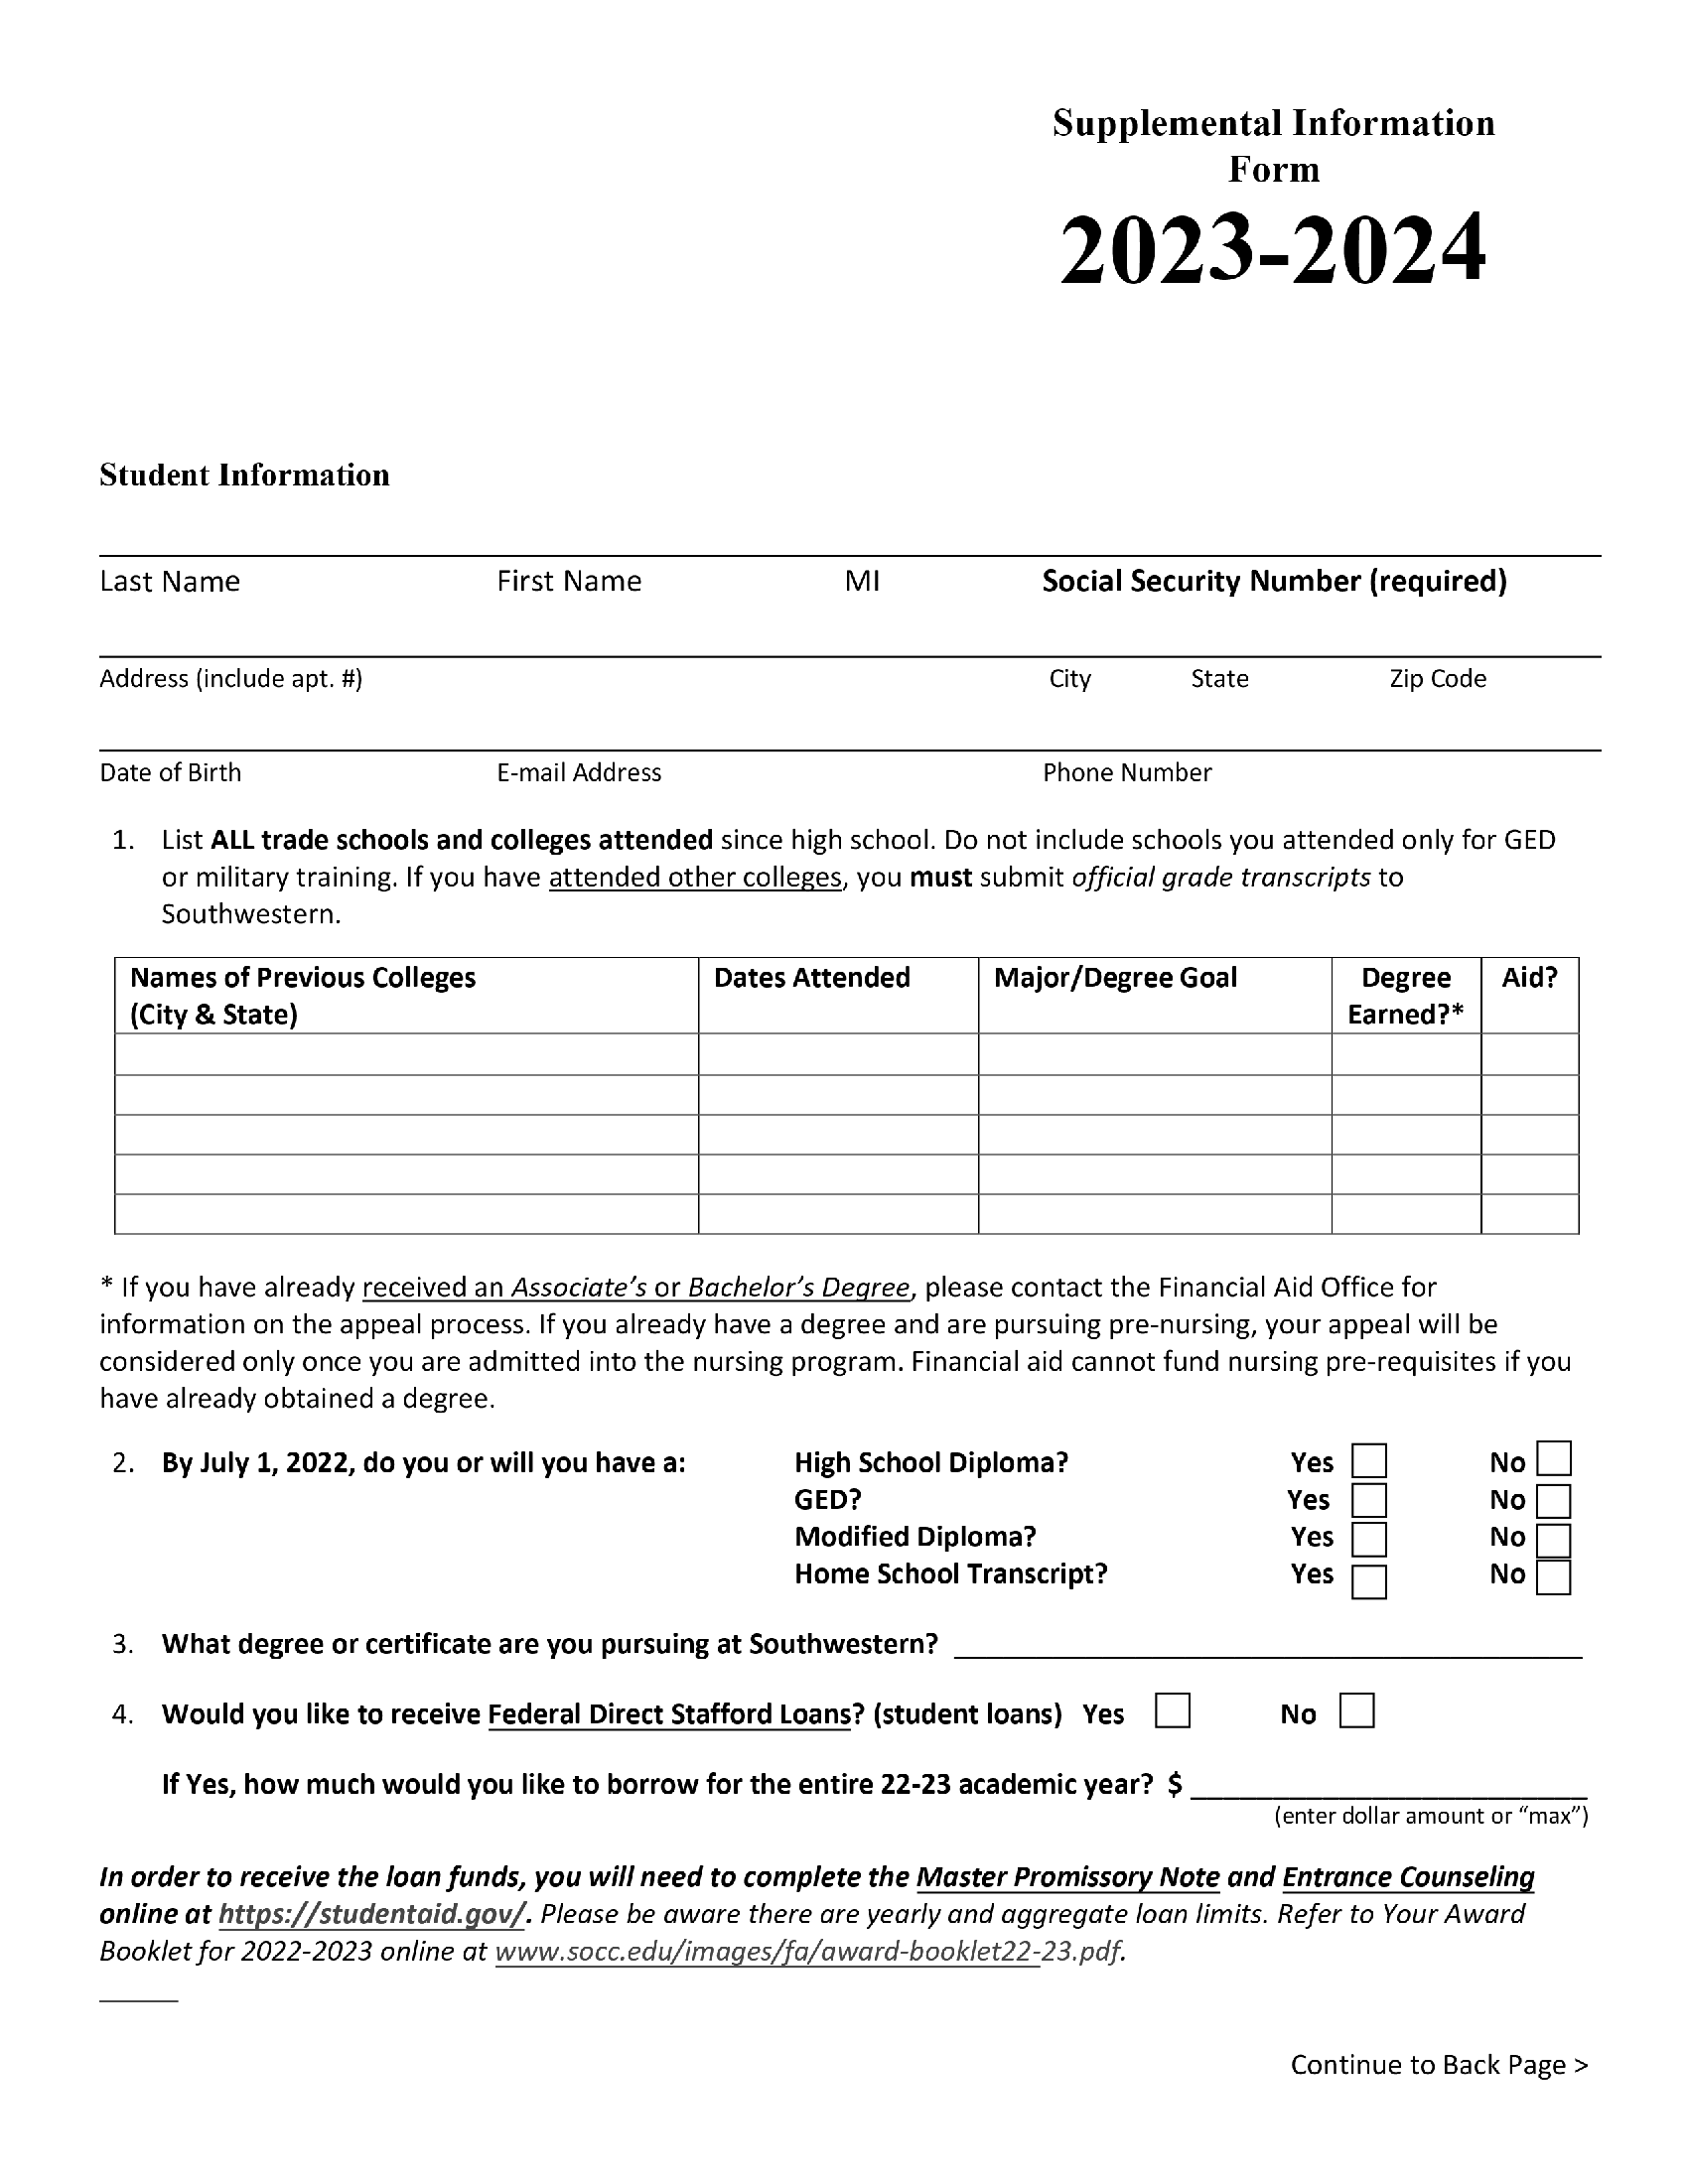 Supplemental Information Form 